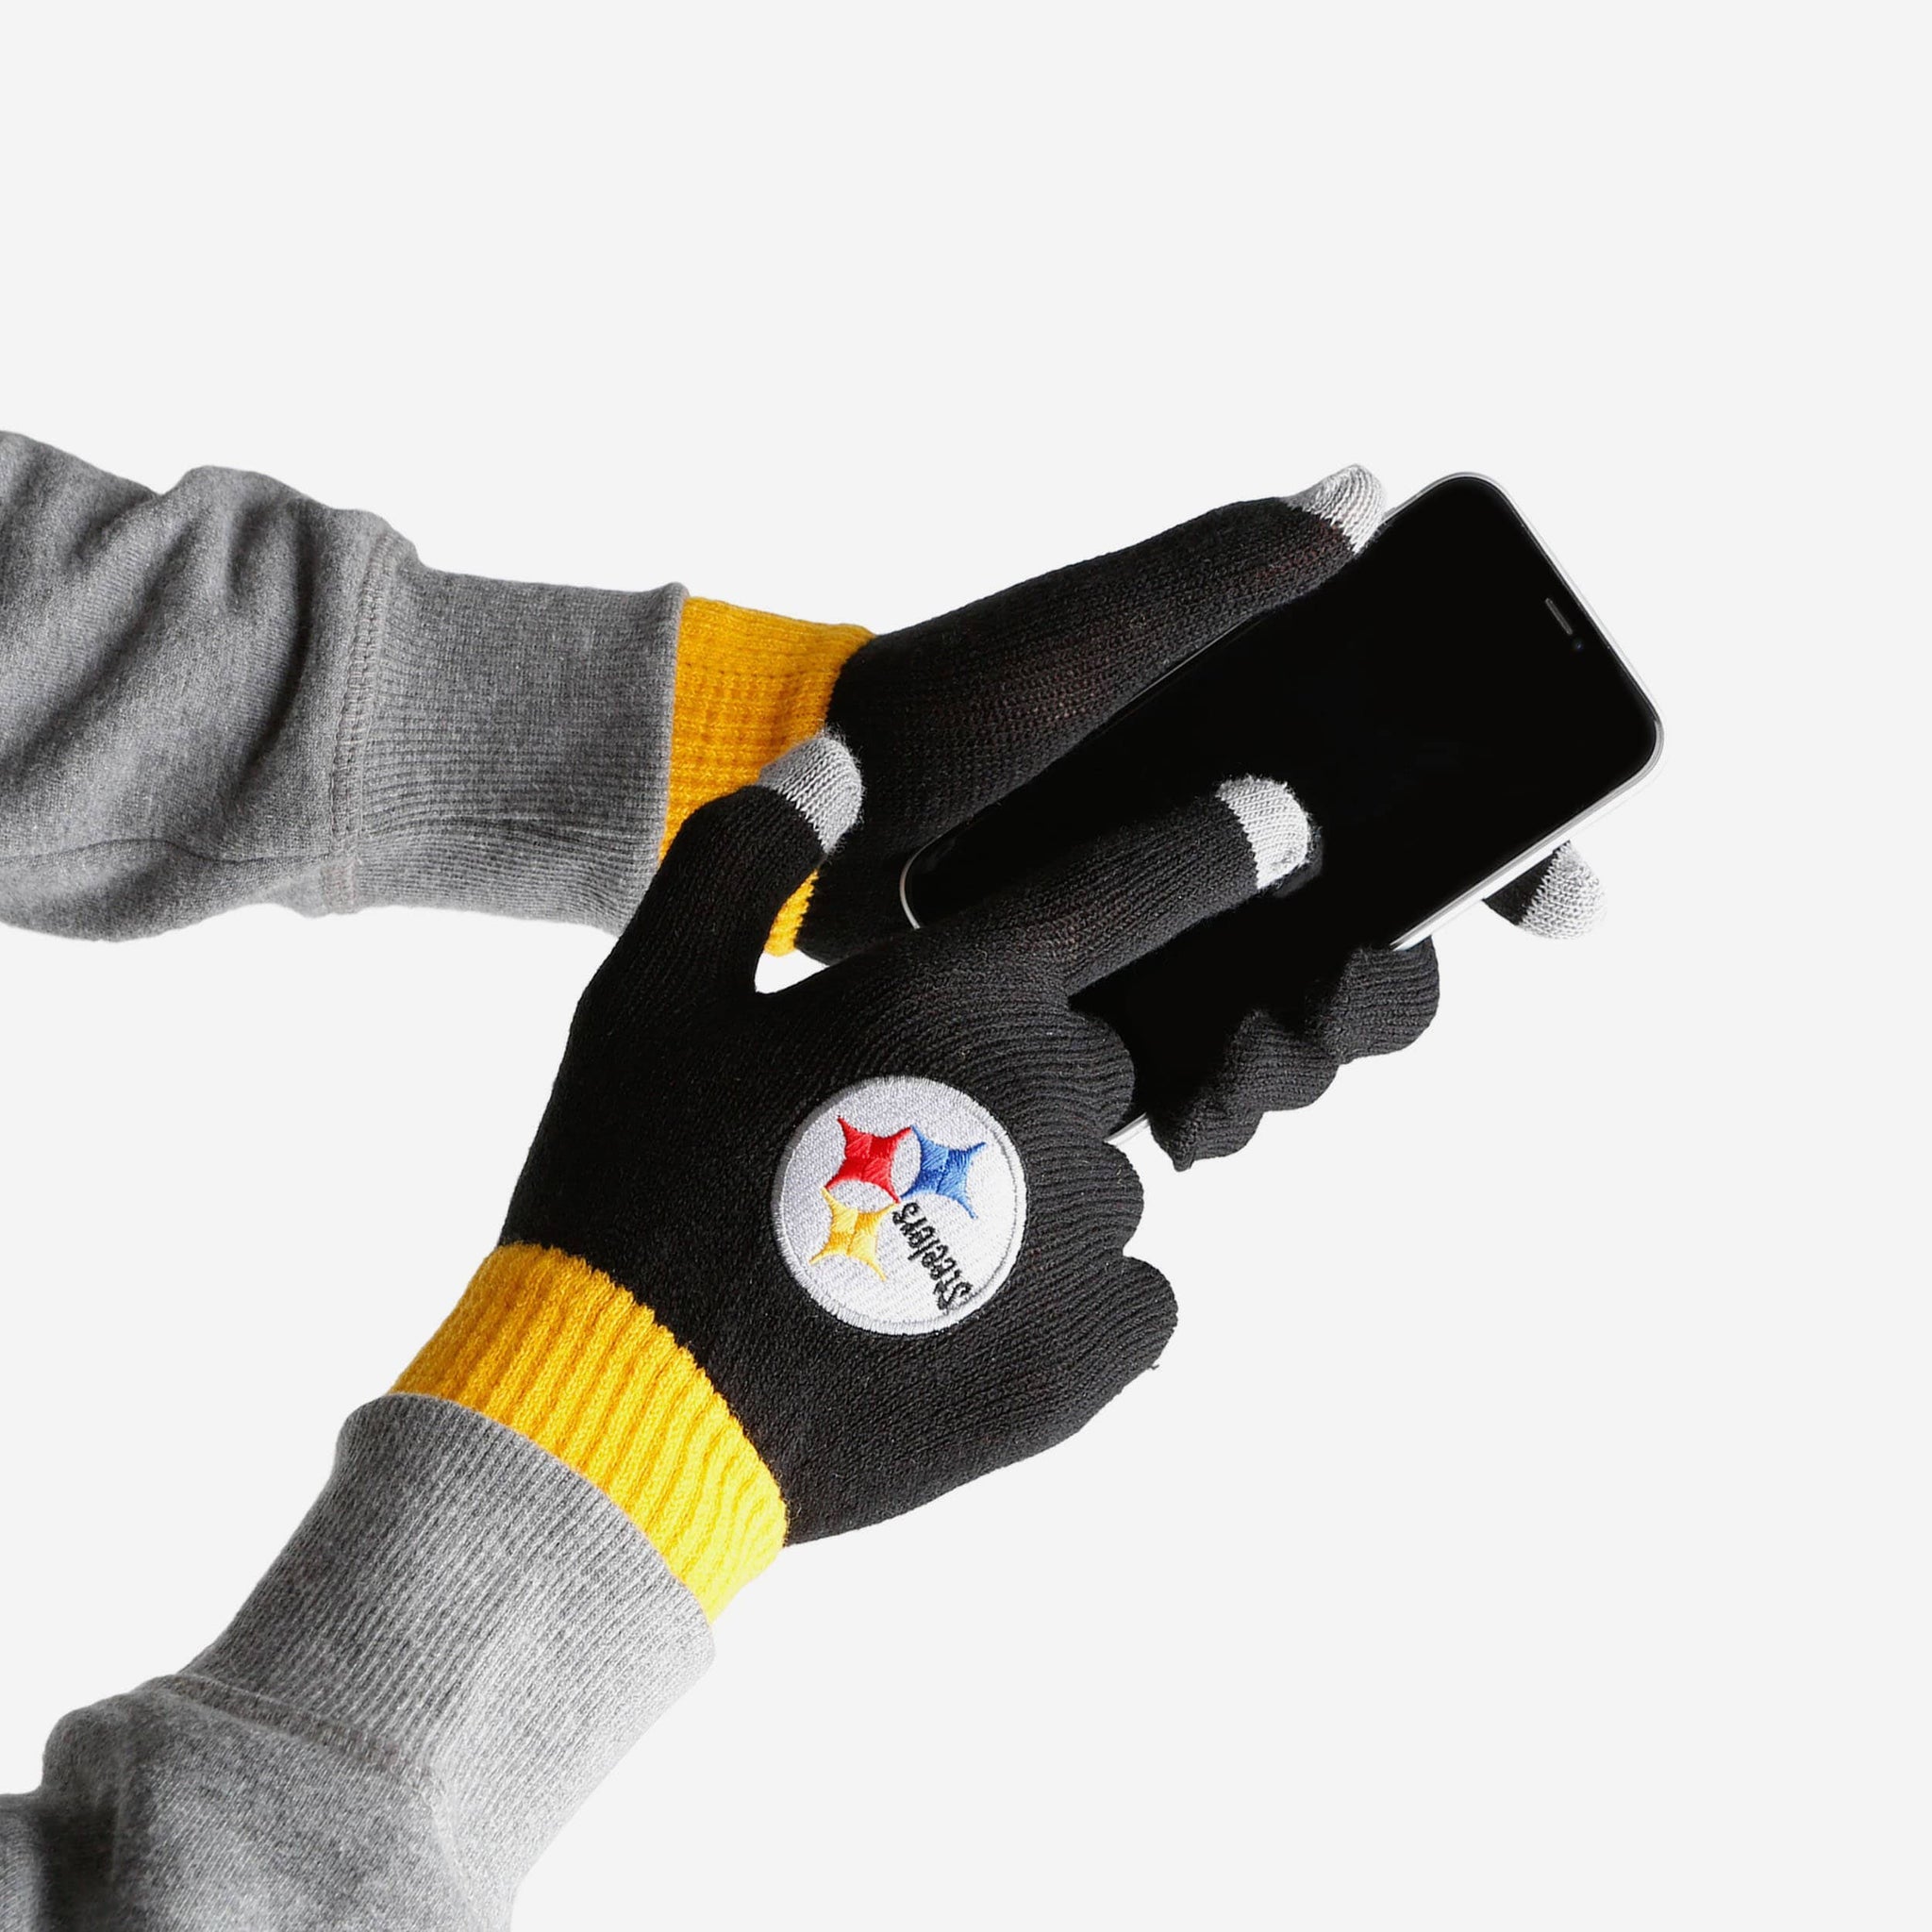 pittsburgh steelers winter gloves